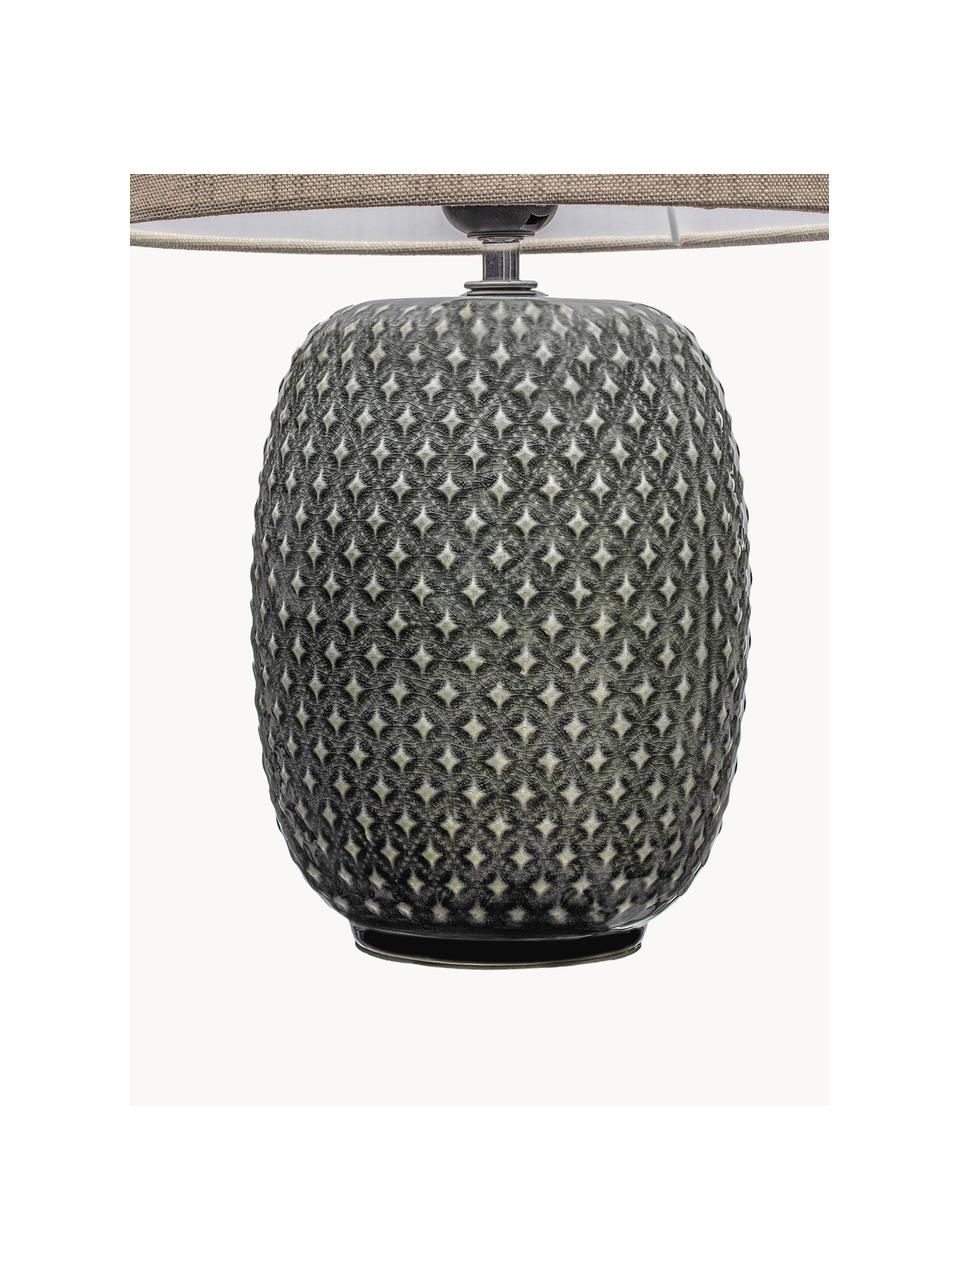 Keramik-Tischlampe Pretty Classy, Lampenschirm: Stoff, Lampenfuß: Keramik, Beige, Grau, Ø 25 x H 40 cm